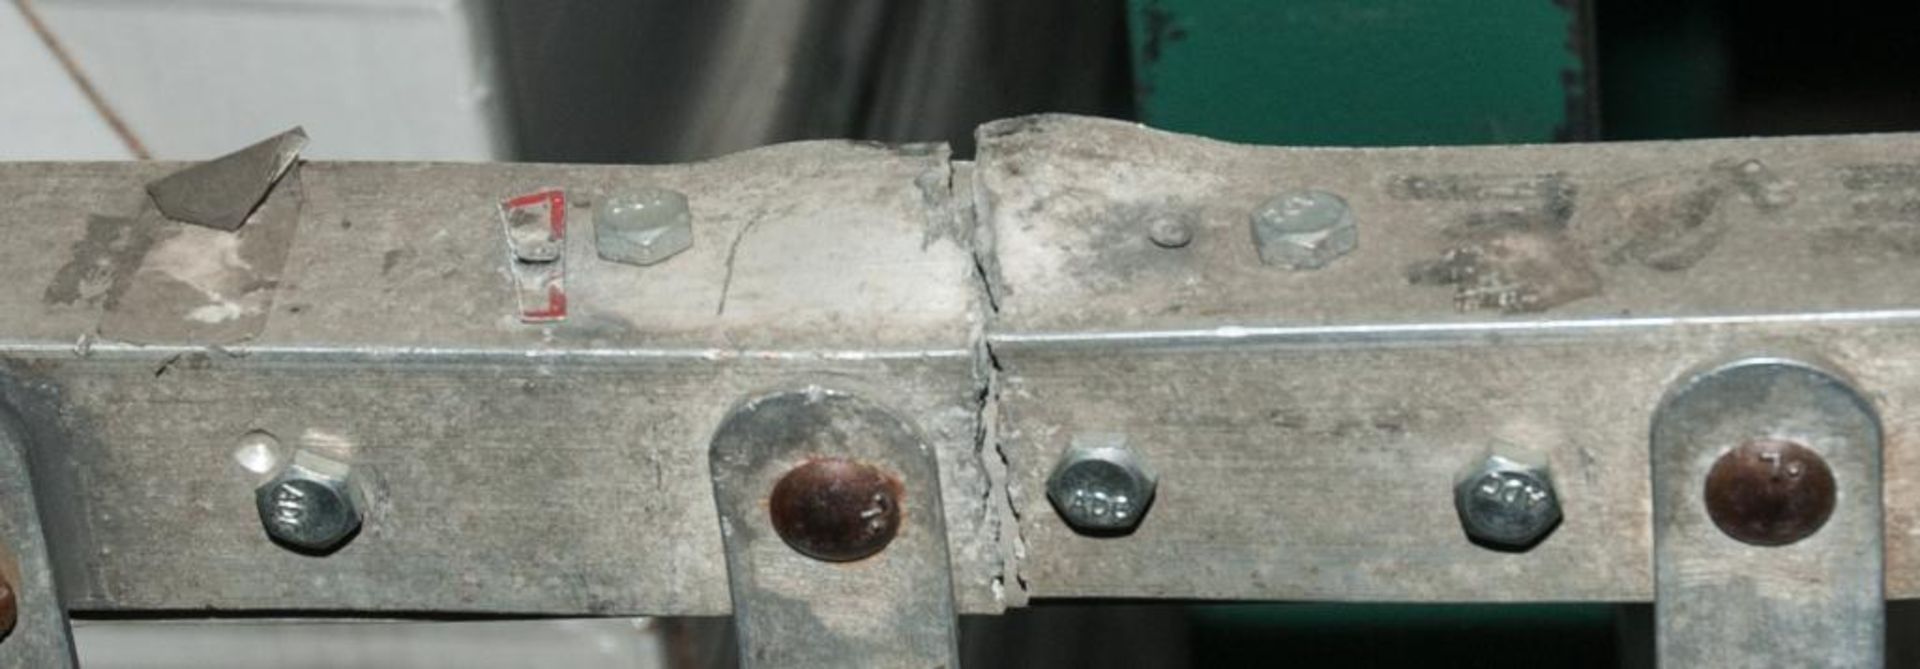 (4) Aluminium Hand Carts, (1) K&S, (1) A&E, (2) Unknown - Image 5 of 7